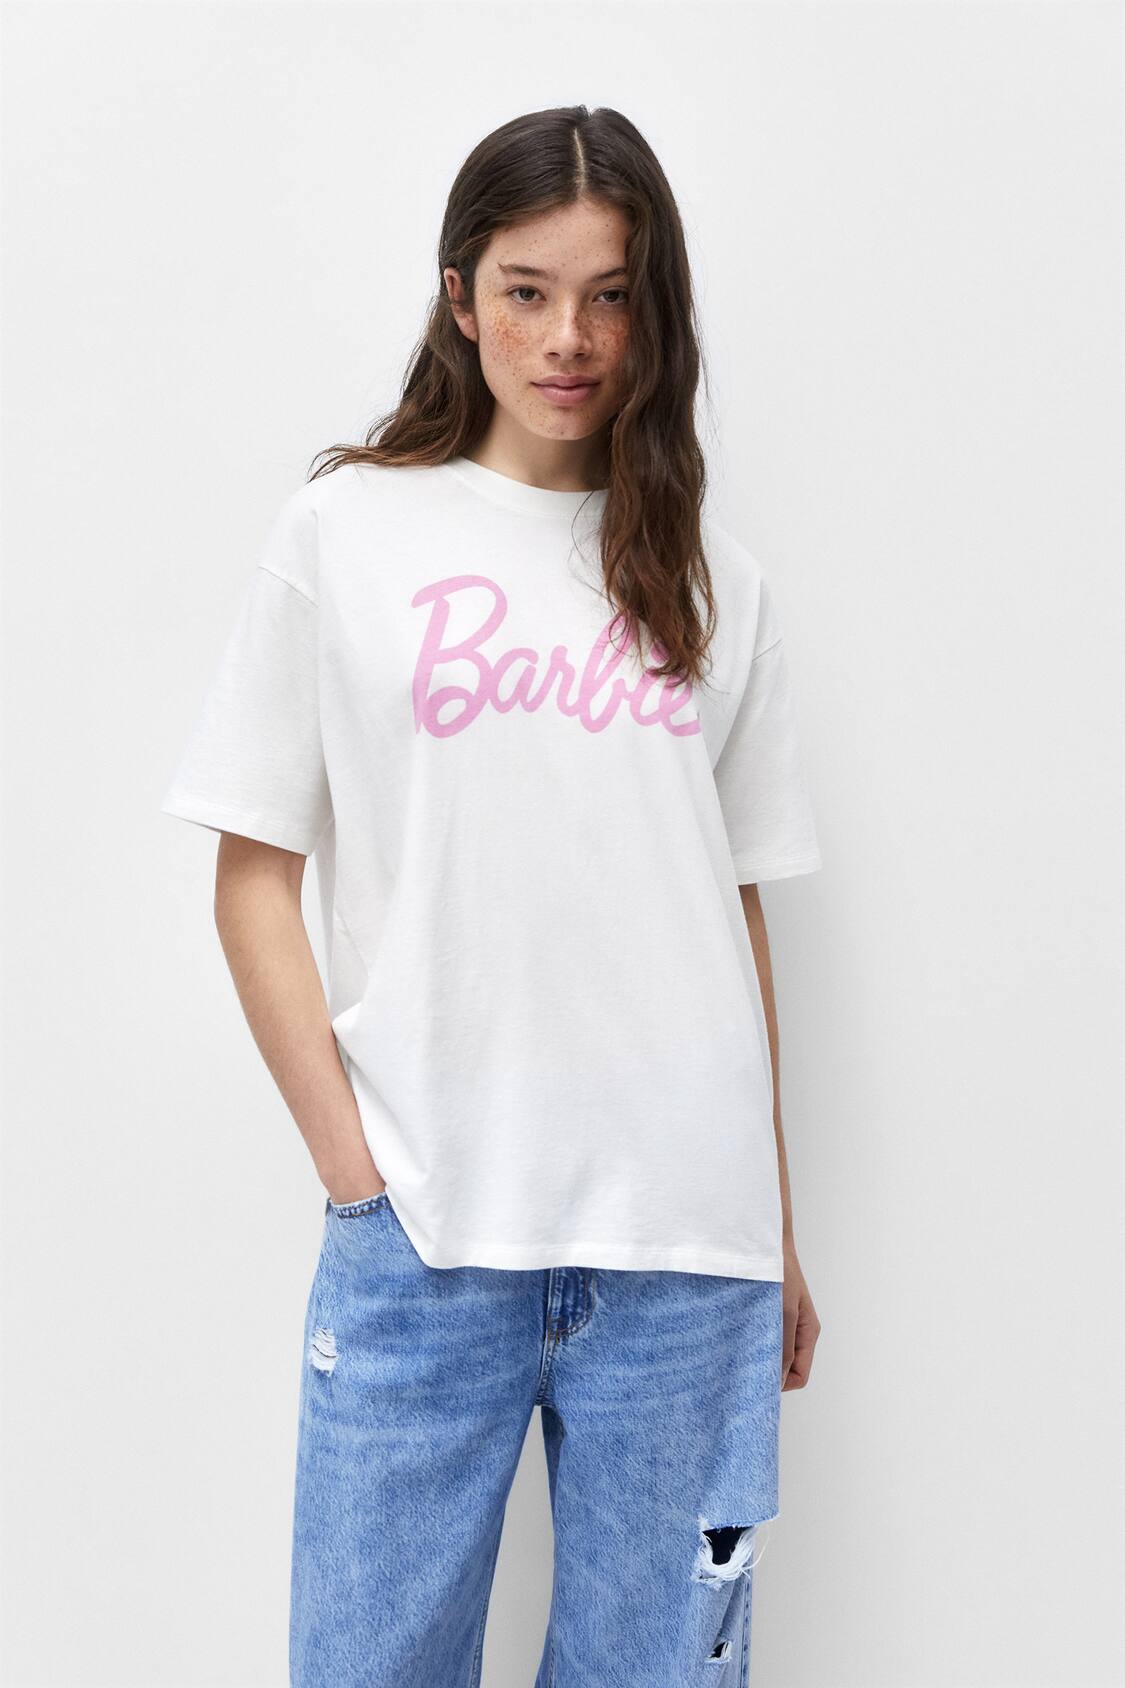 Camisetas de Mujer Originales - Logos, Disney... PULL&BEAR